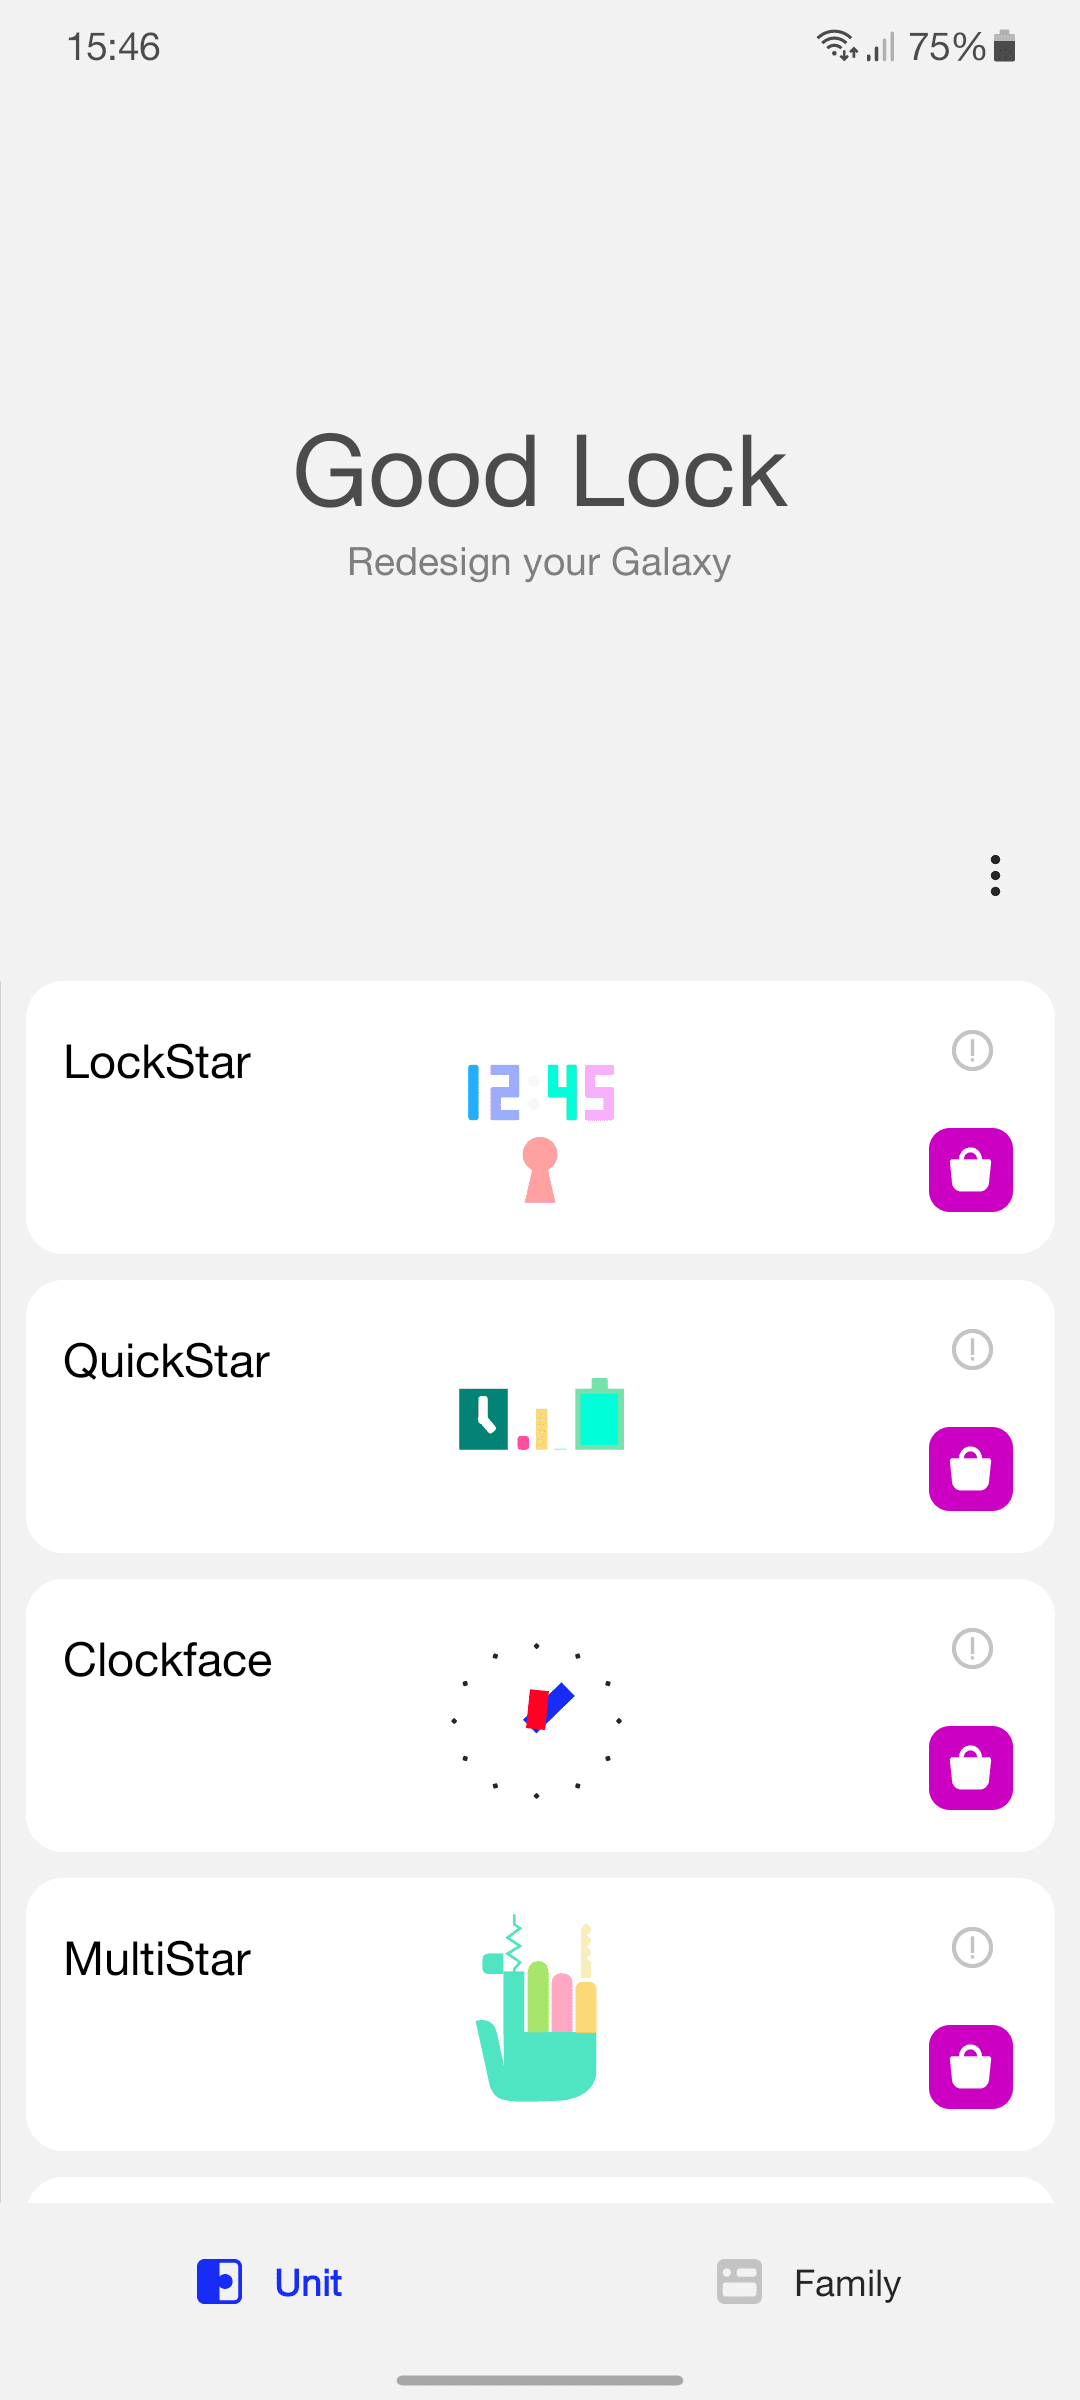 Good Lock - One UI